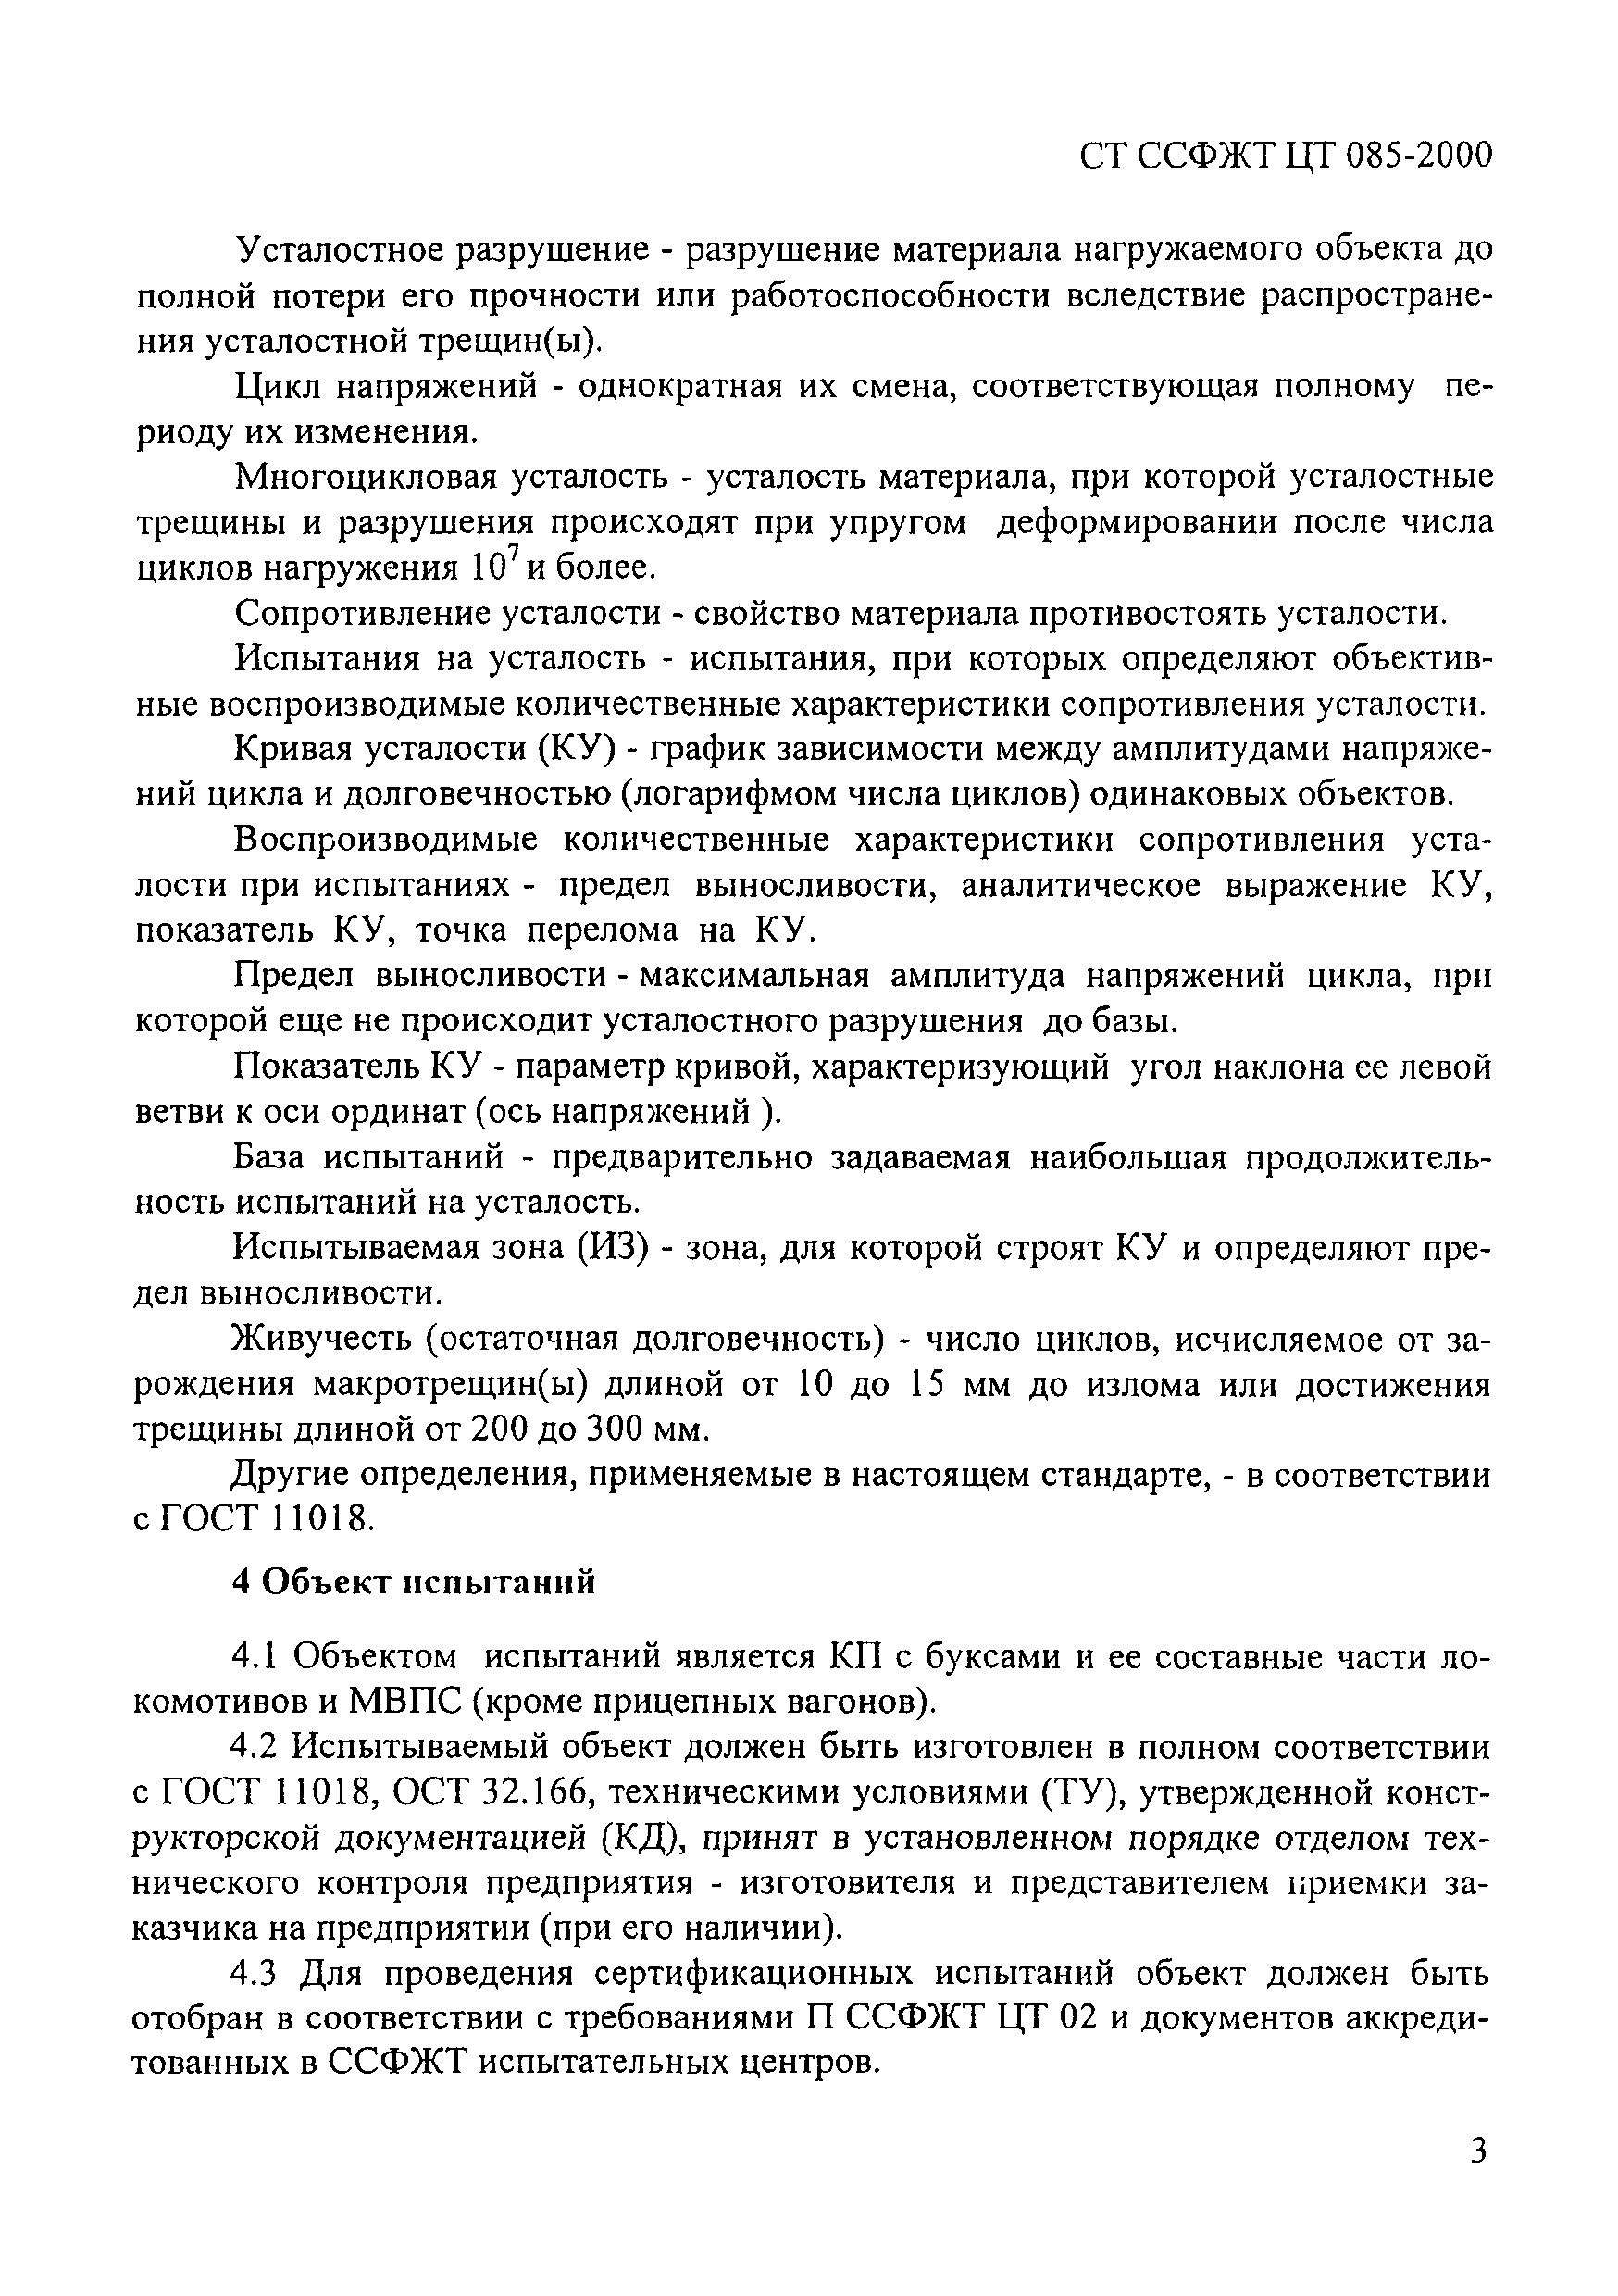 СТ ССФЖТ ЦТ 085-2000